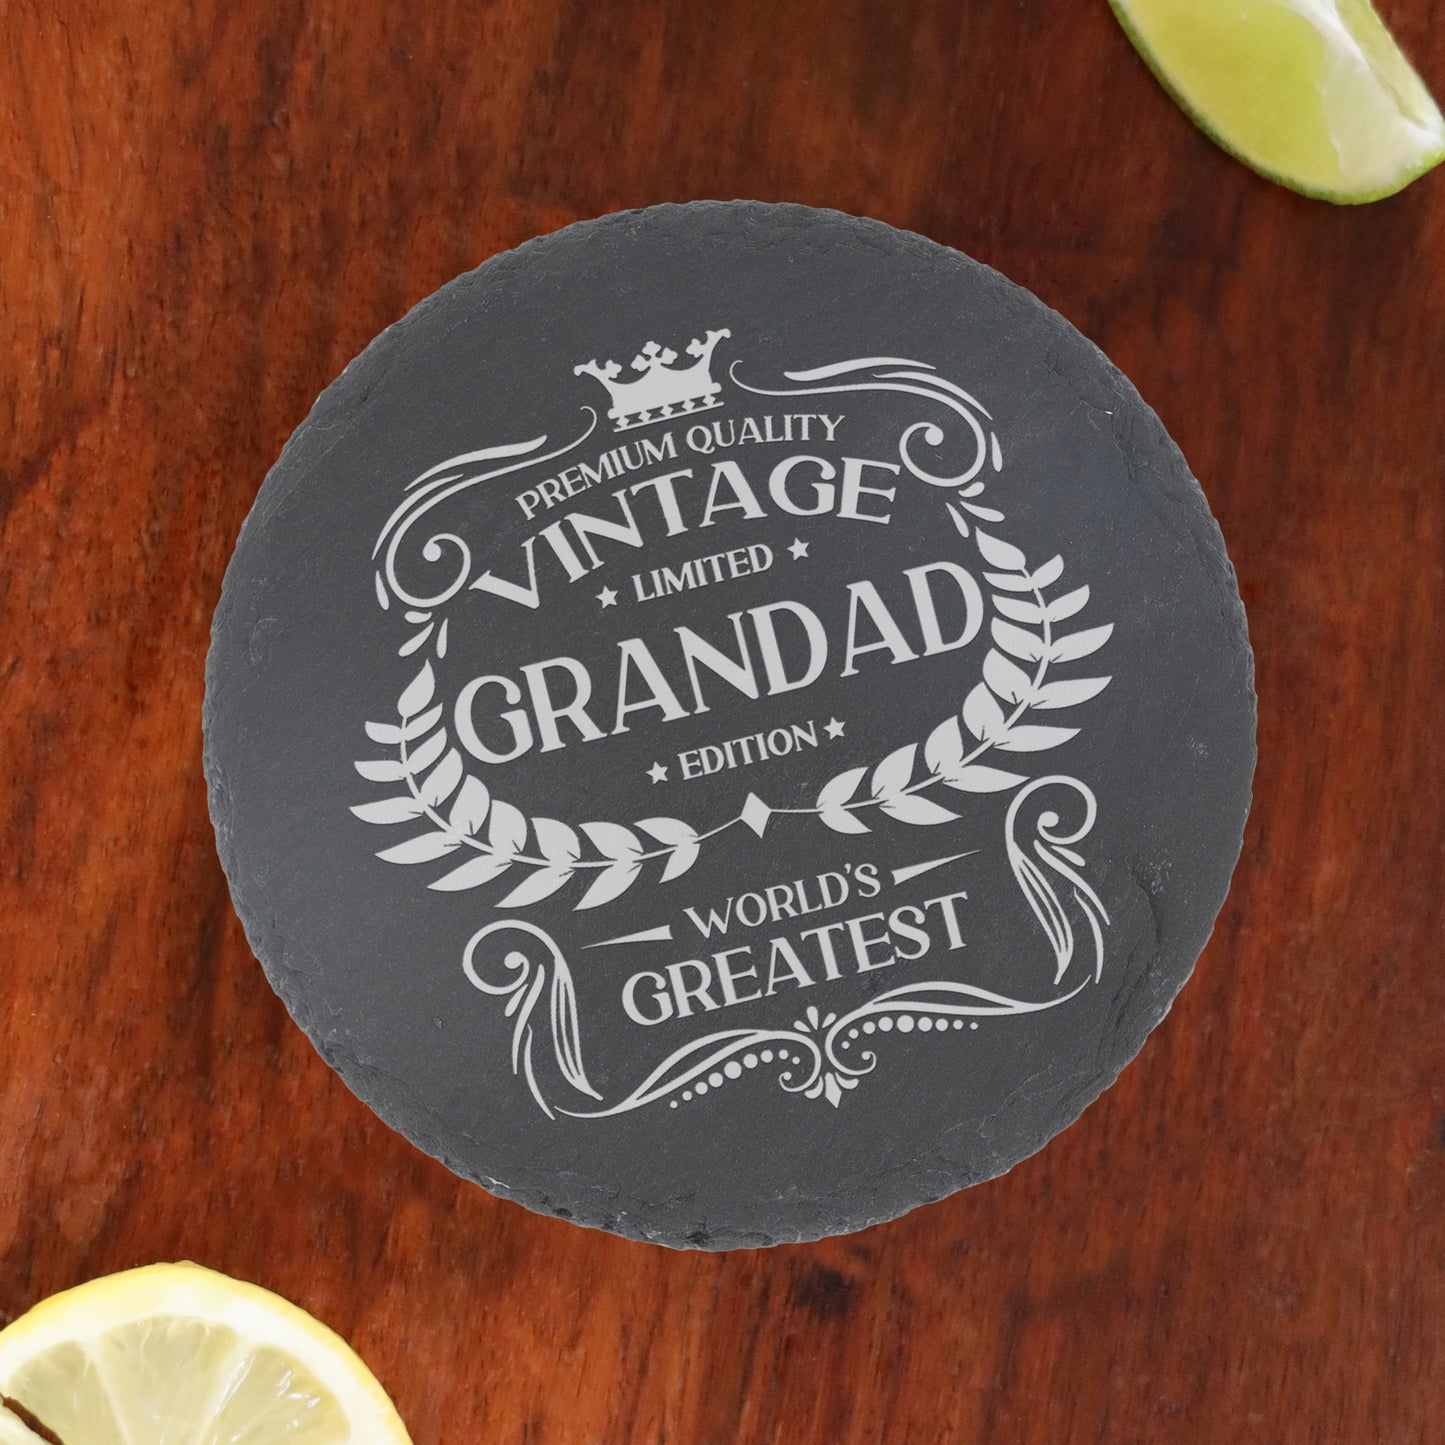 Vintage World's Greatest Grandad Engraved Wine Glass Gift  - Always Looking Good -   